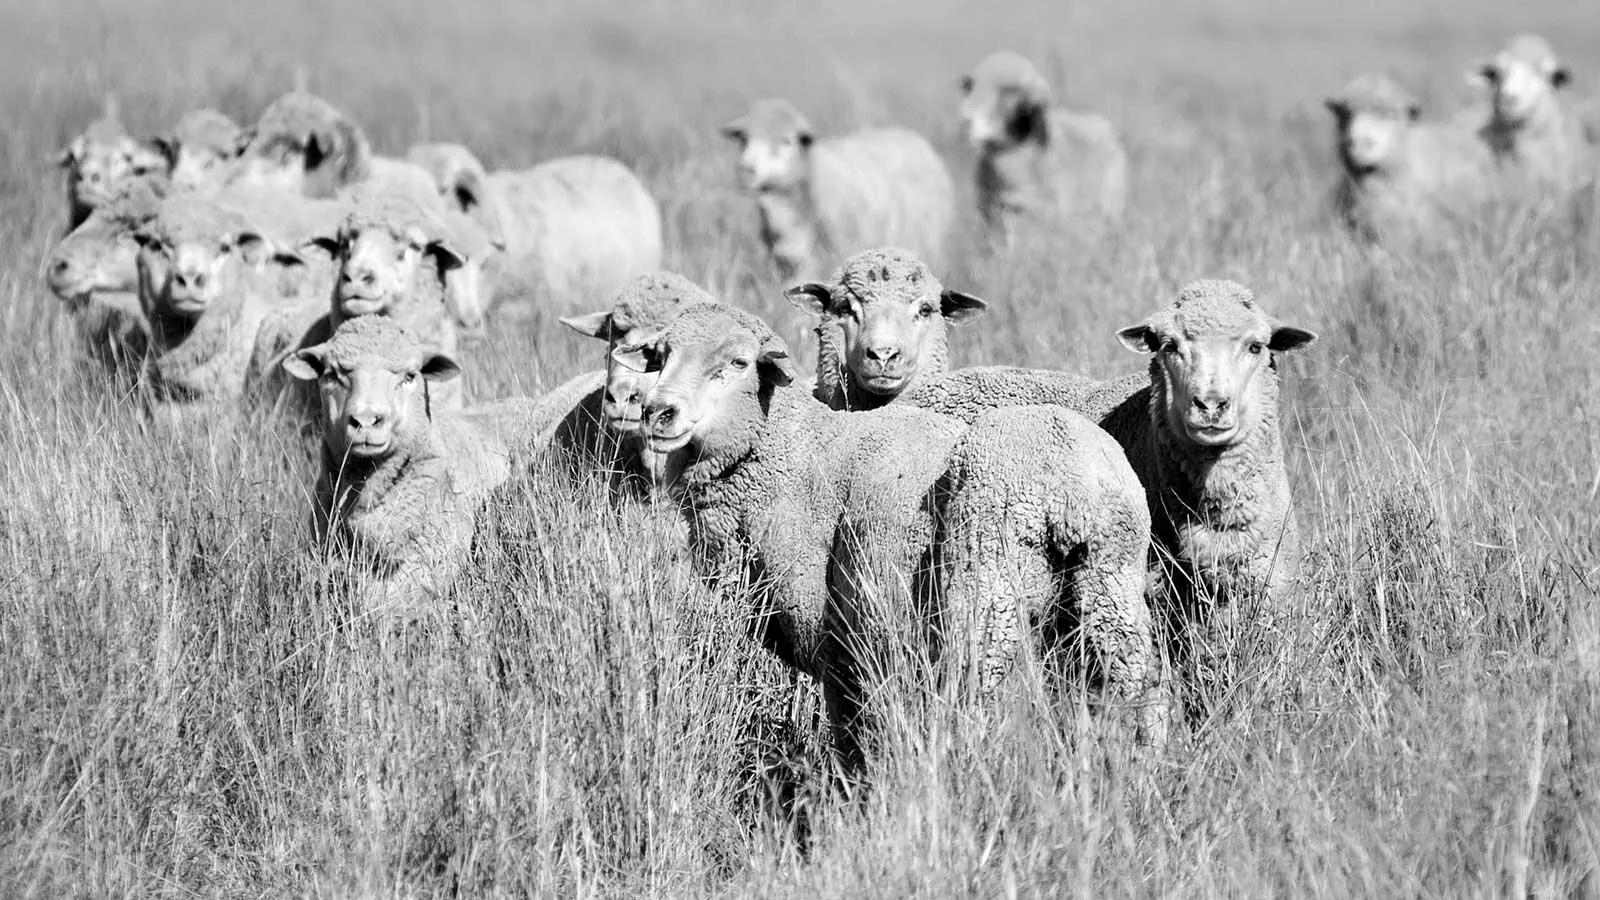 Marketing sheep breeding programs